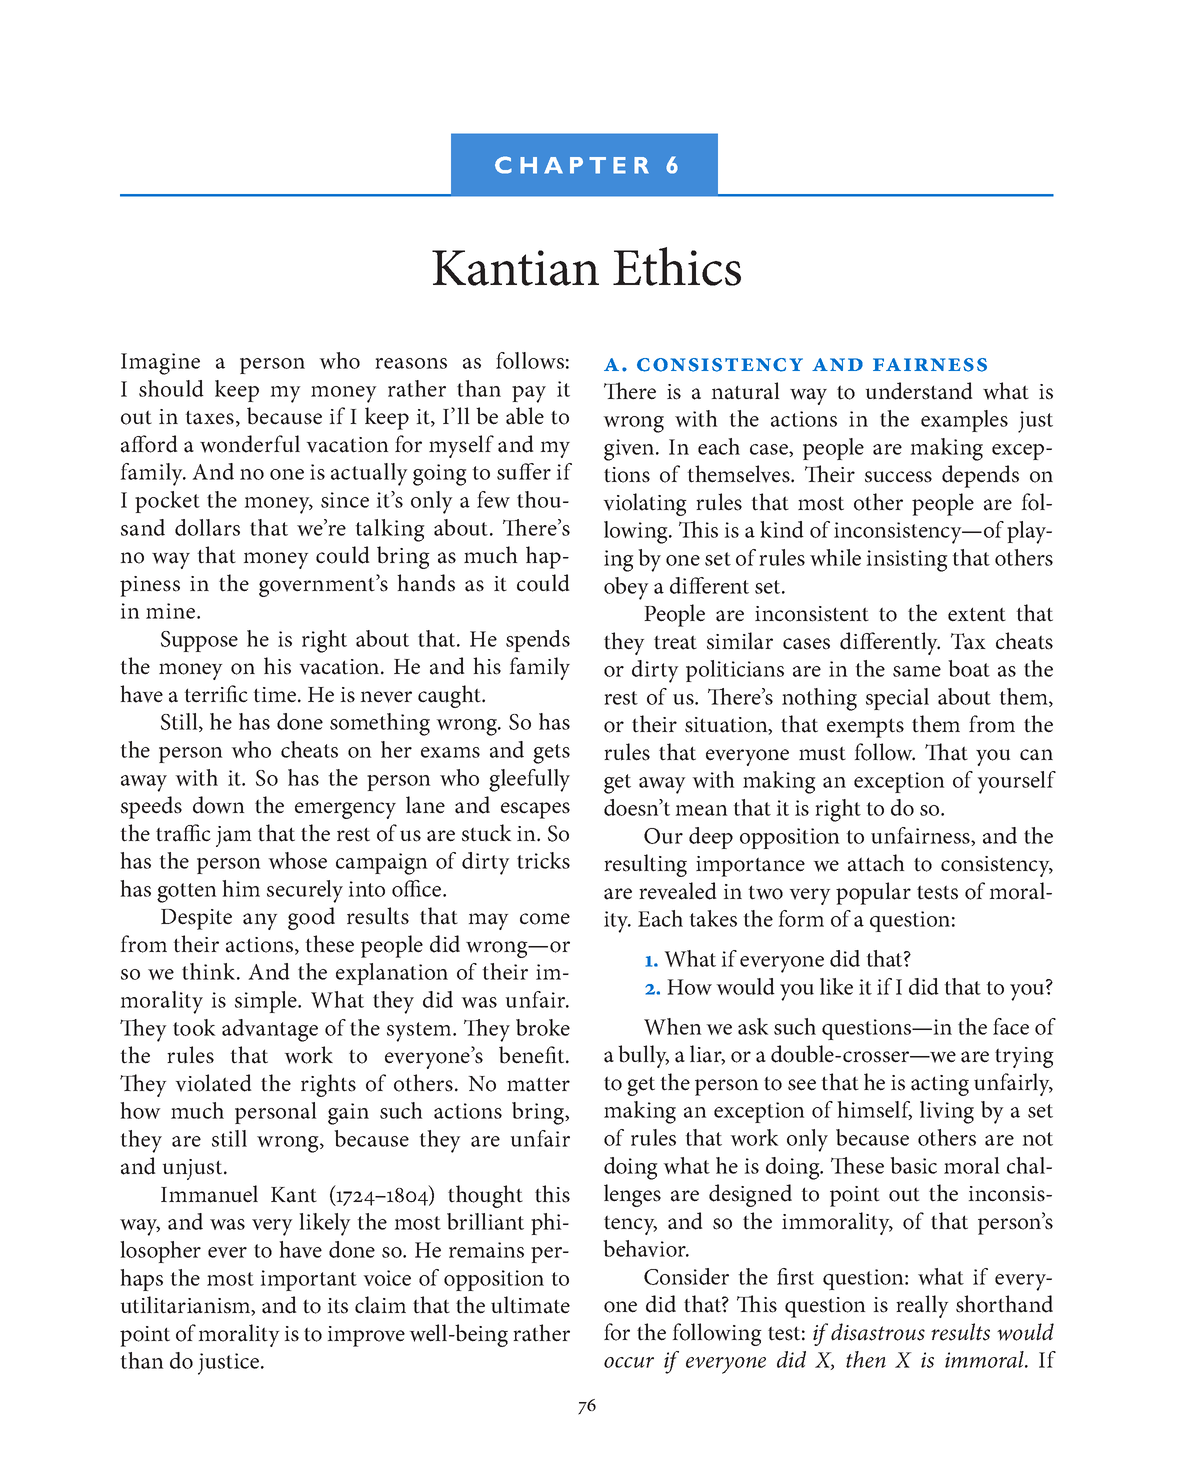 kantian ethics essay questions